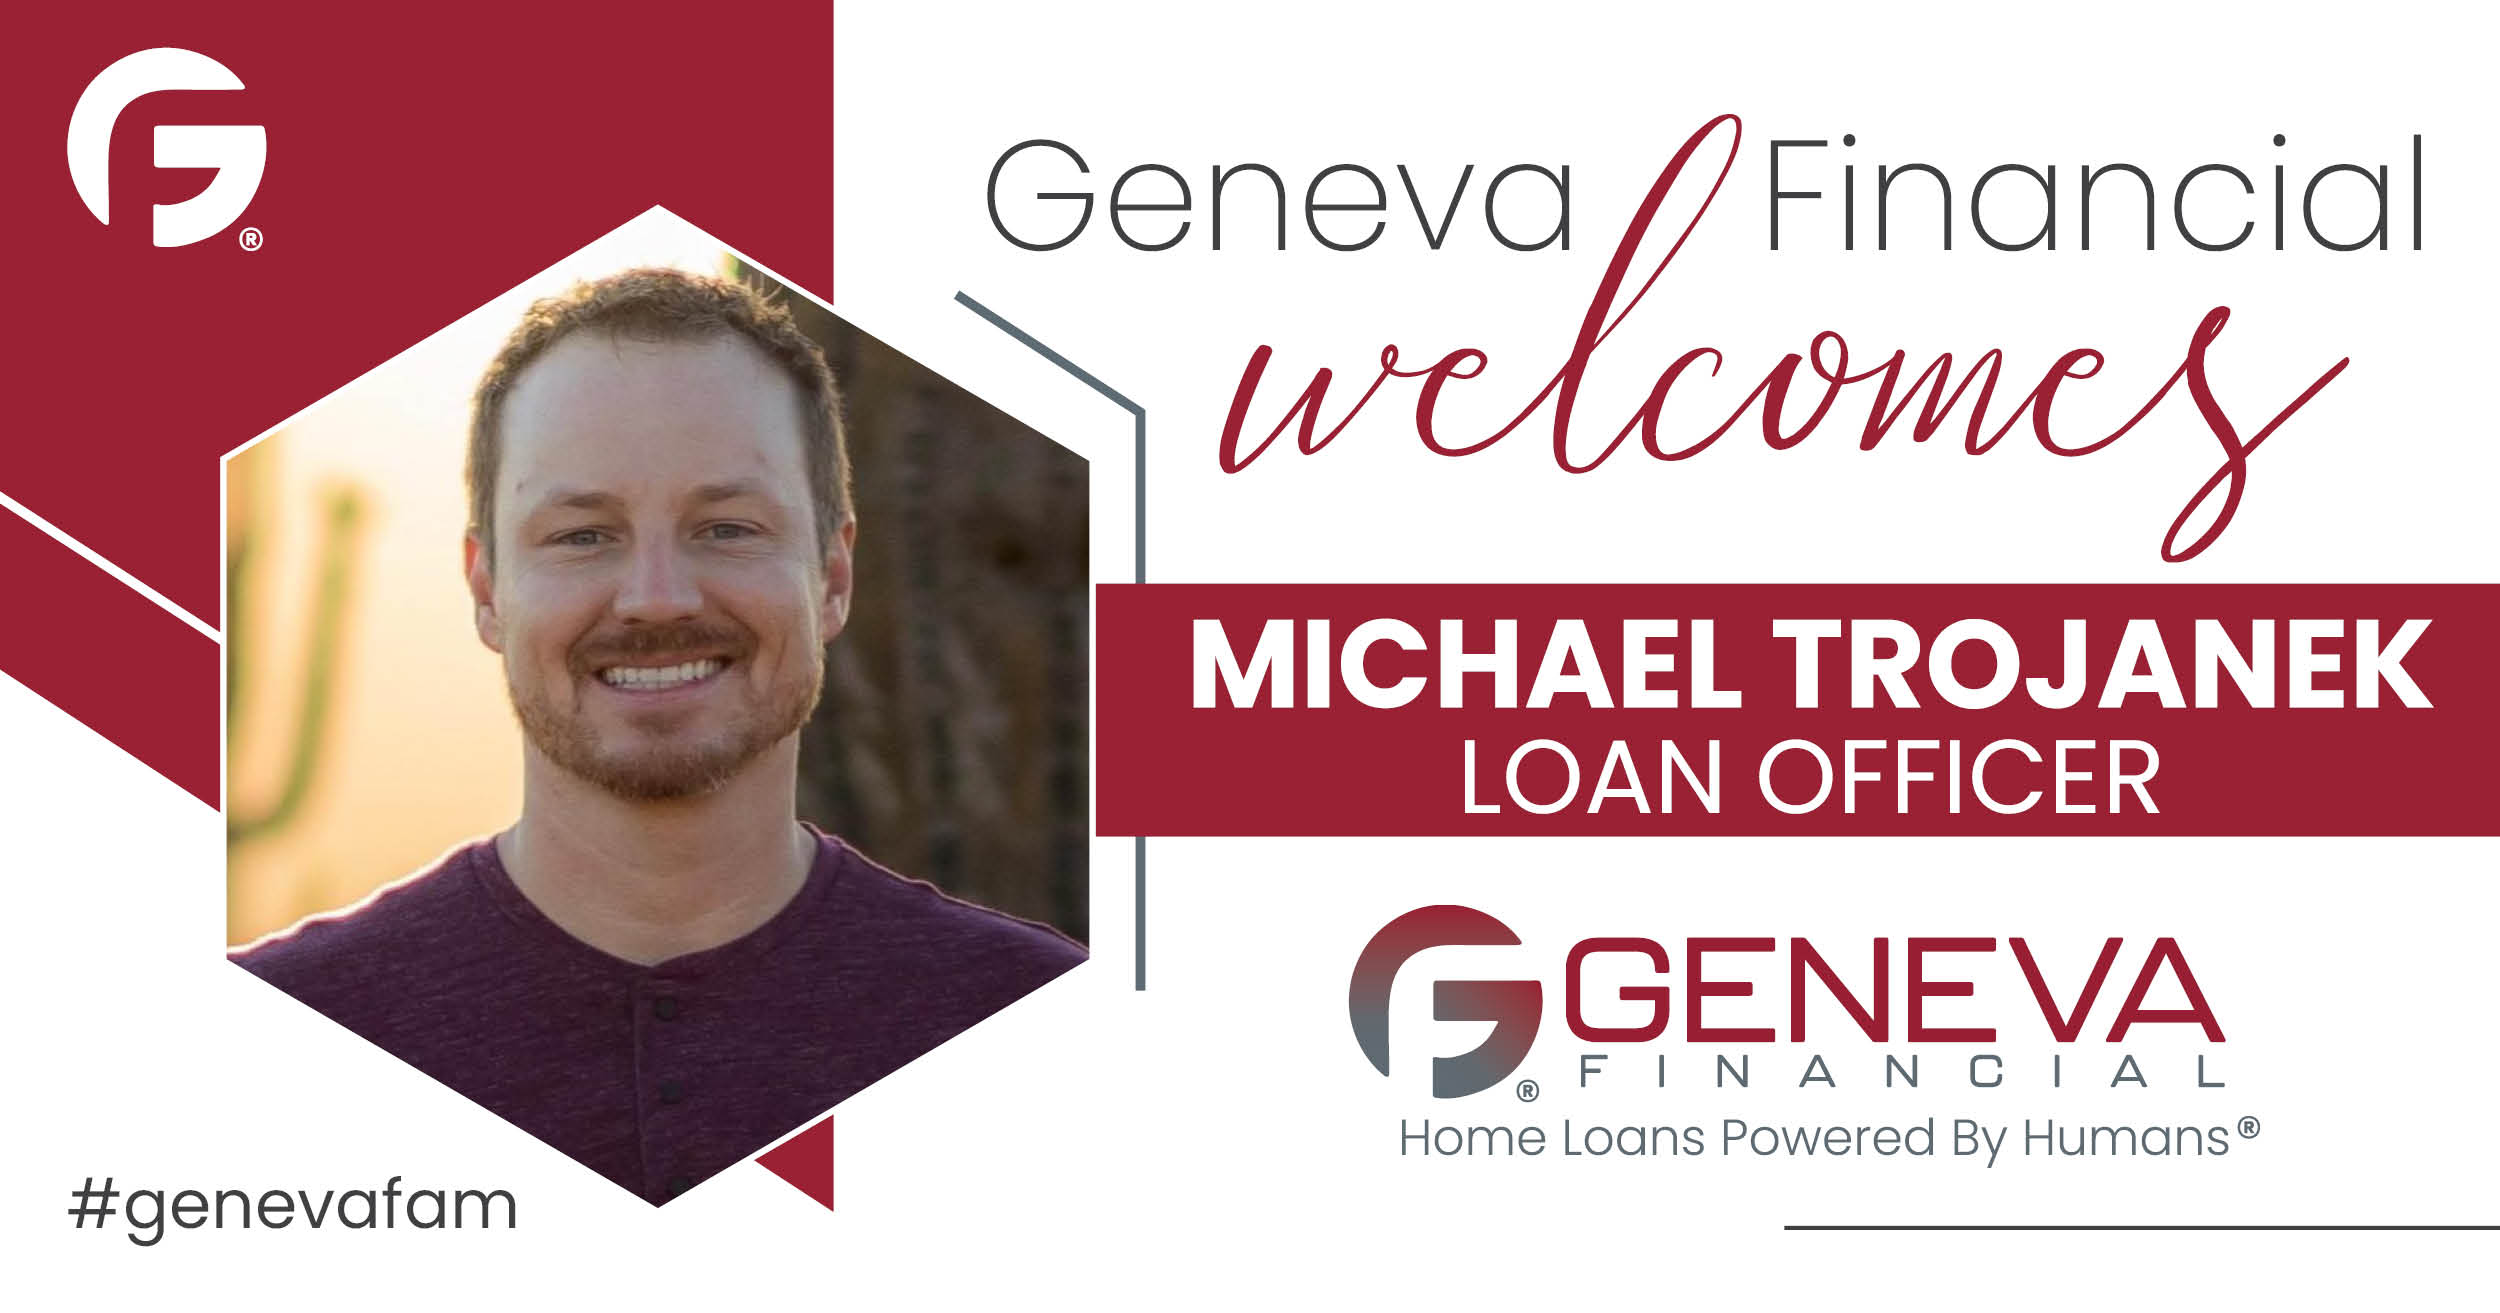 Geneva Financial Home Loans Welcomes New Loan Officer Michael Trojanek to Phoenix, Arizona – Home Loans Powered by Humans®.